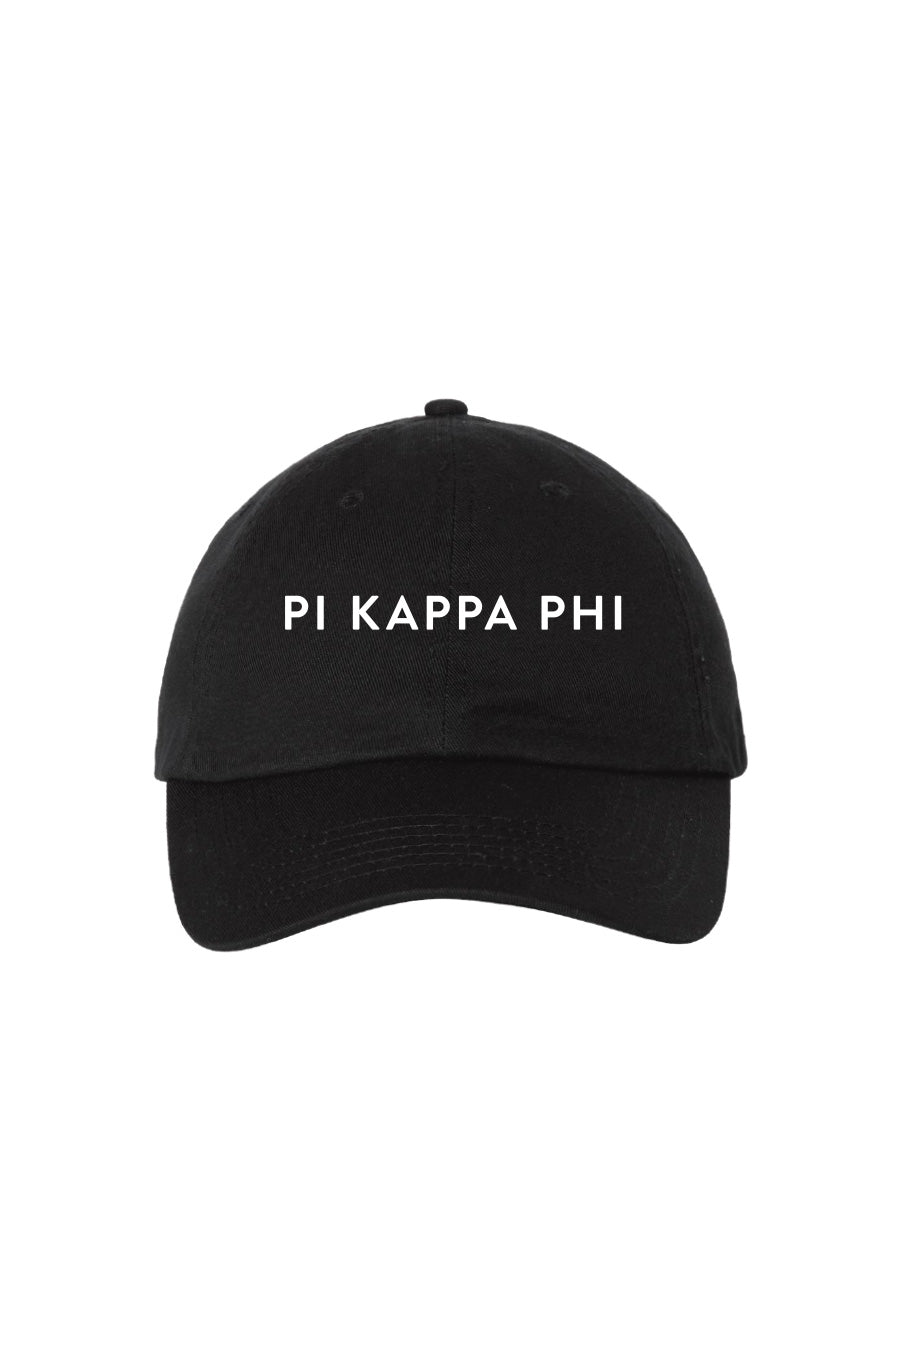 Everyday Pi Kappa Phi Hat